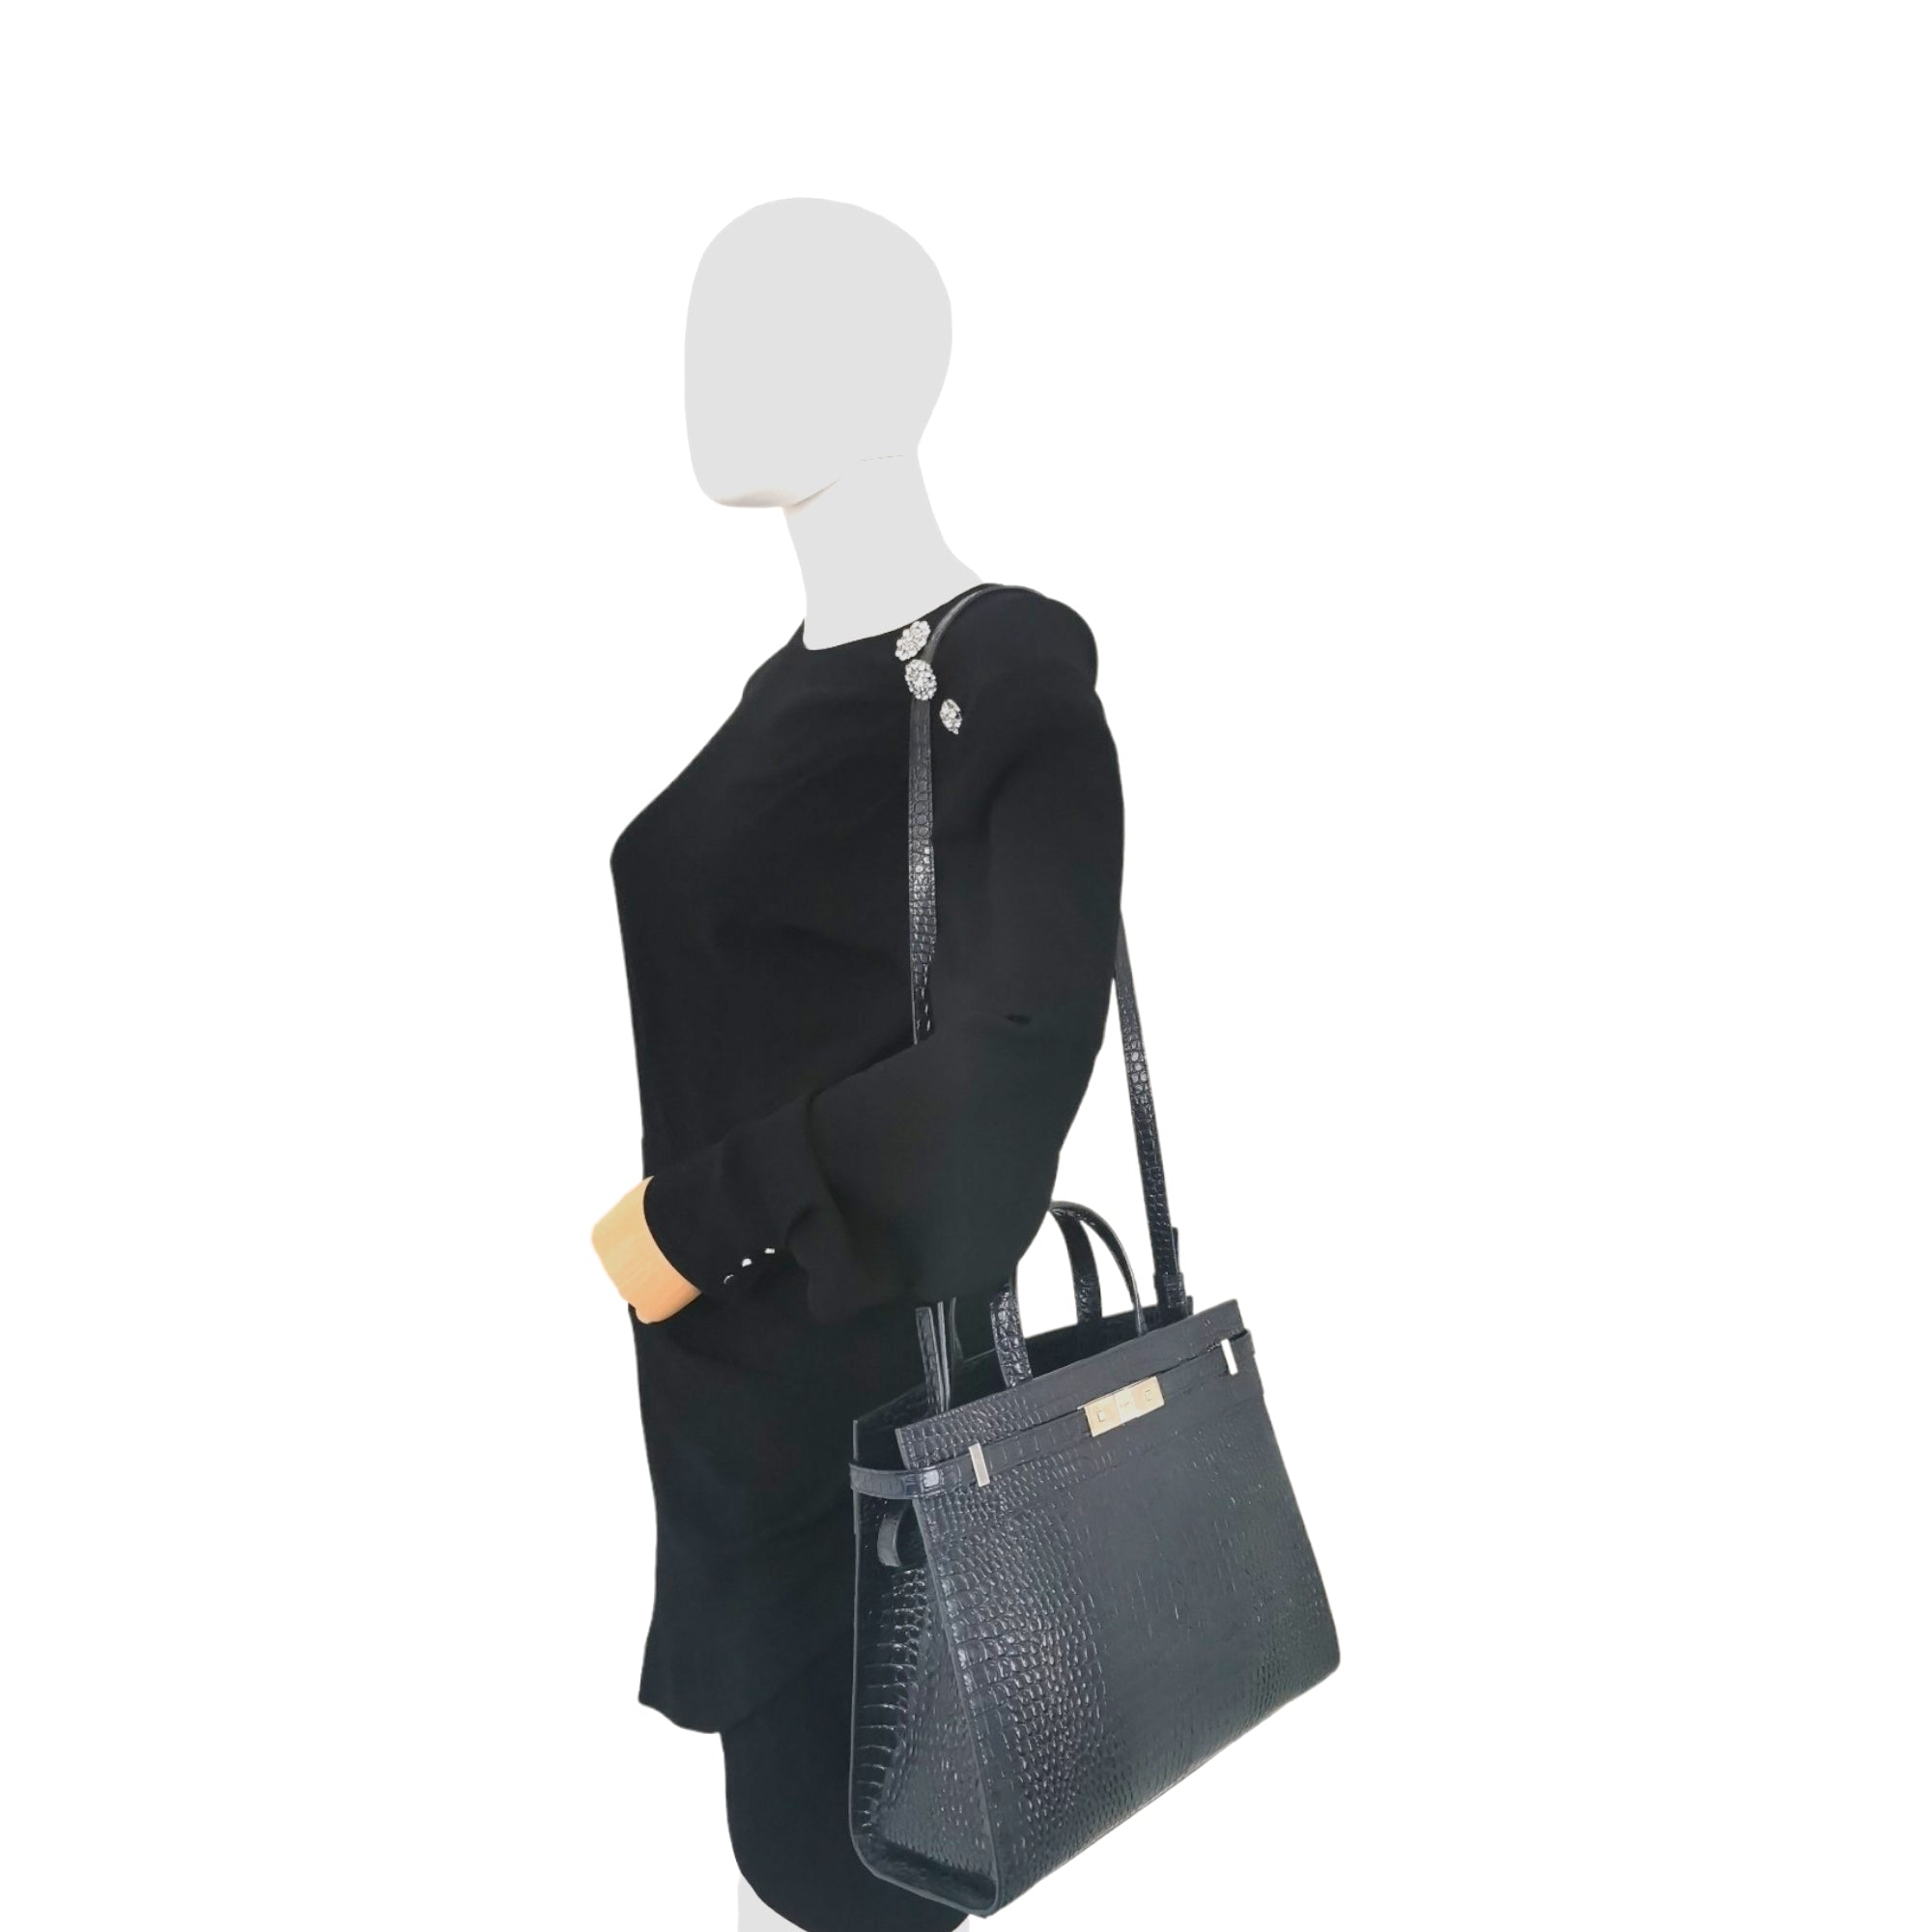 Saint Laurent Manhattan Leather Shoulder Bag - Black Croc/Gold